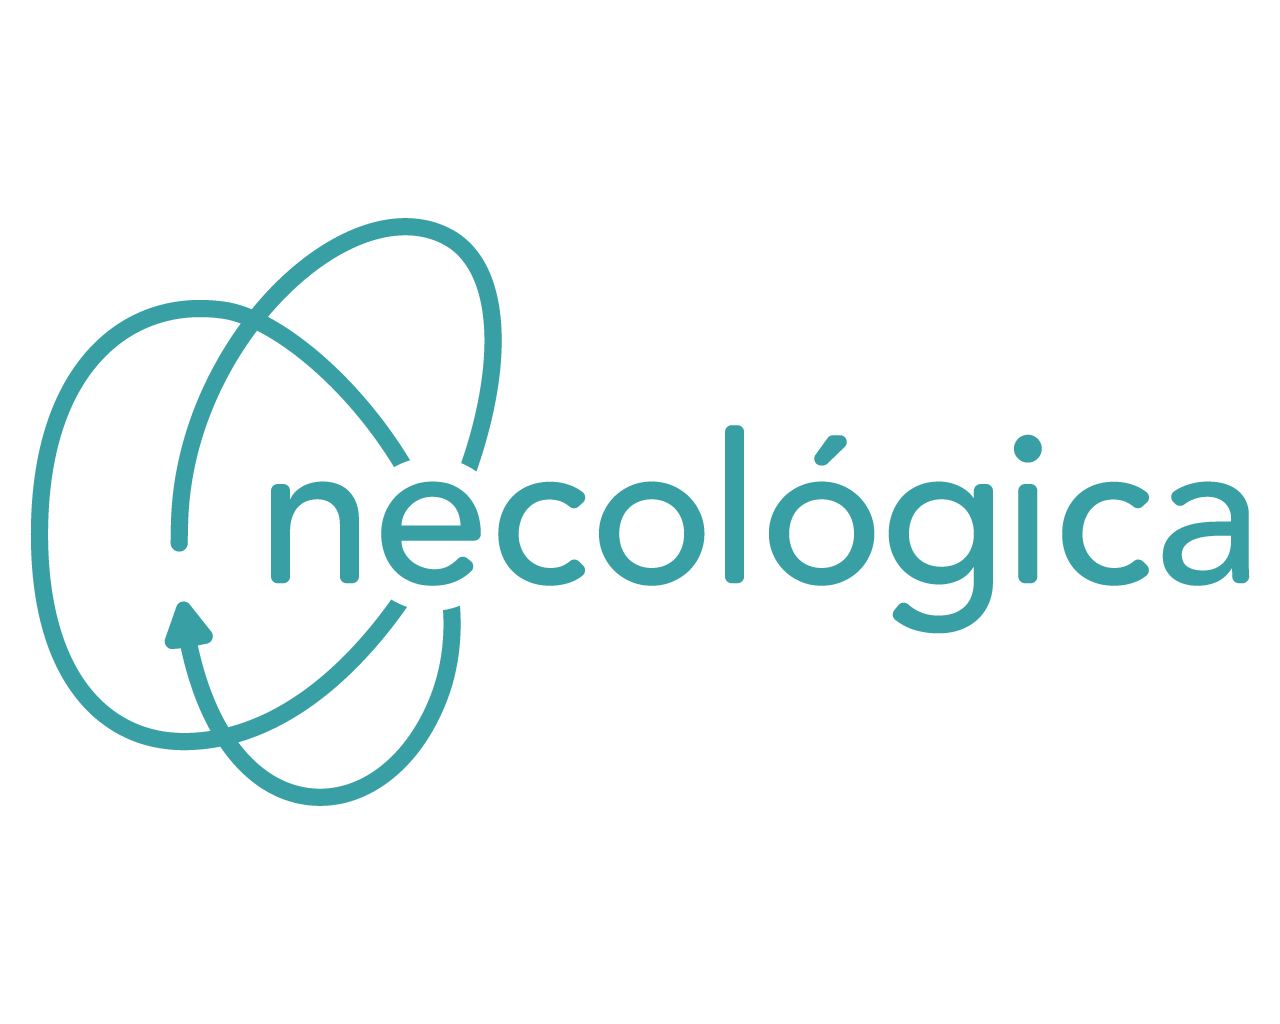 Necologica logo